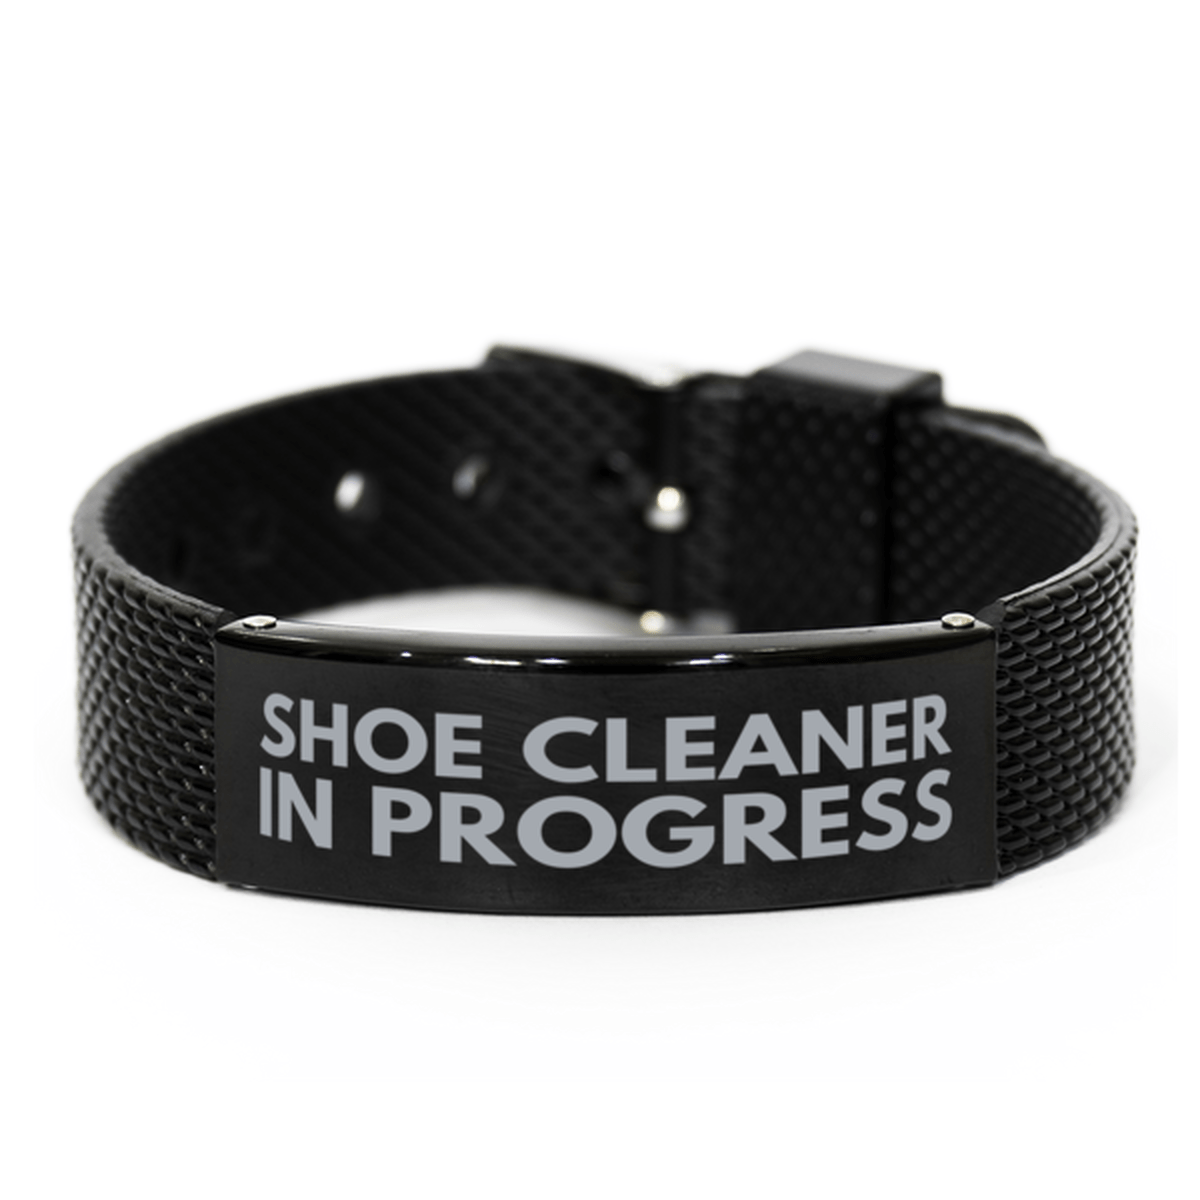 Inspirational Shoe Cleaner Black Shark Mesh Bracelet, Shoe Cleaner In Progress, Best Graduation Gifts for Students